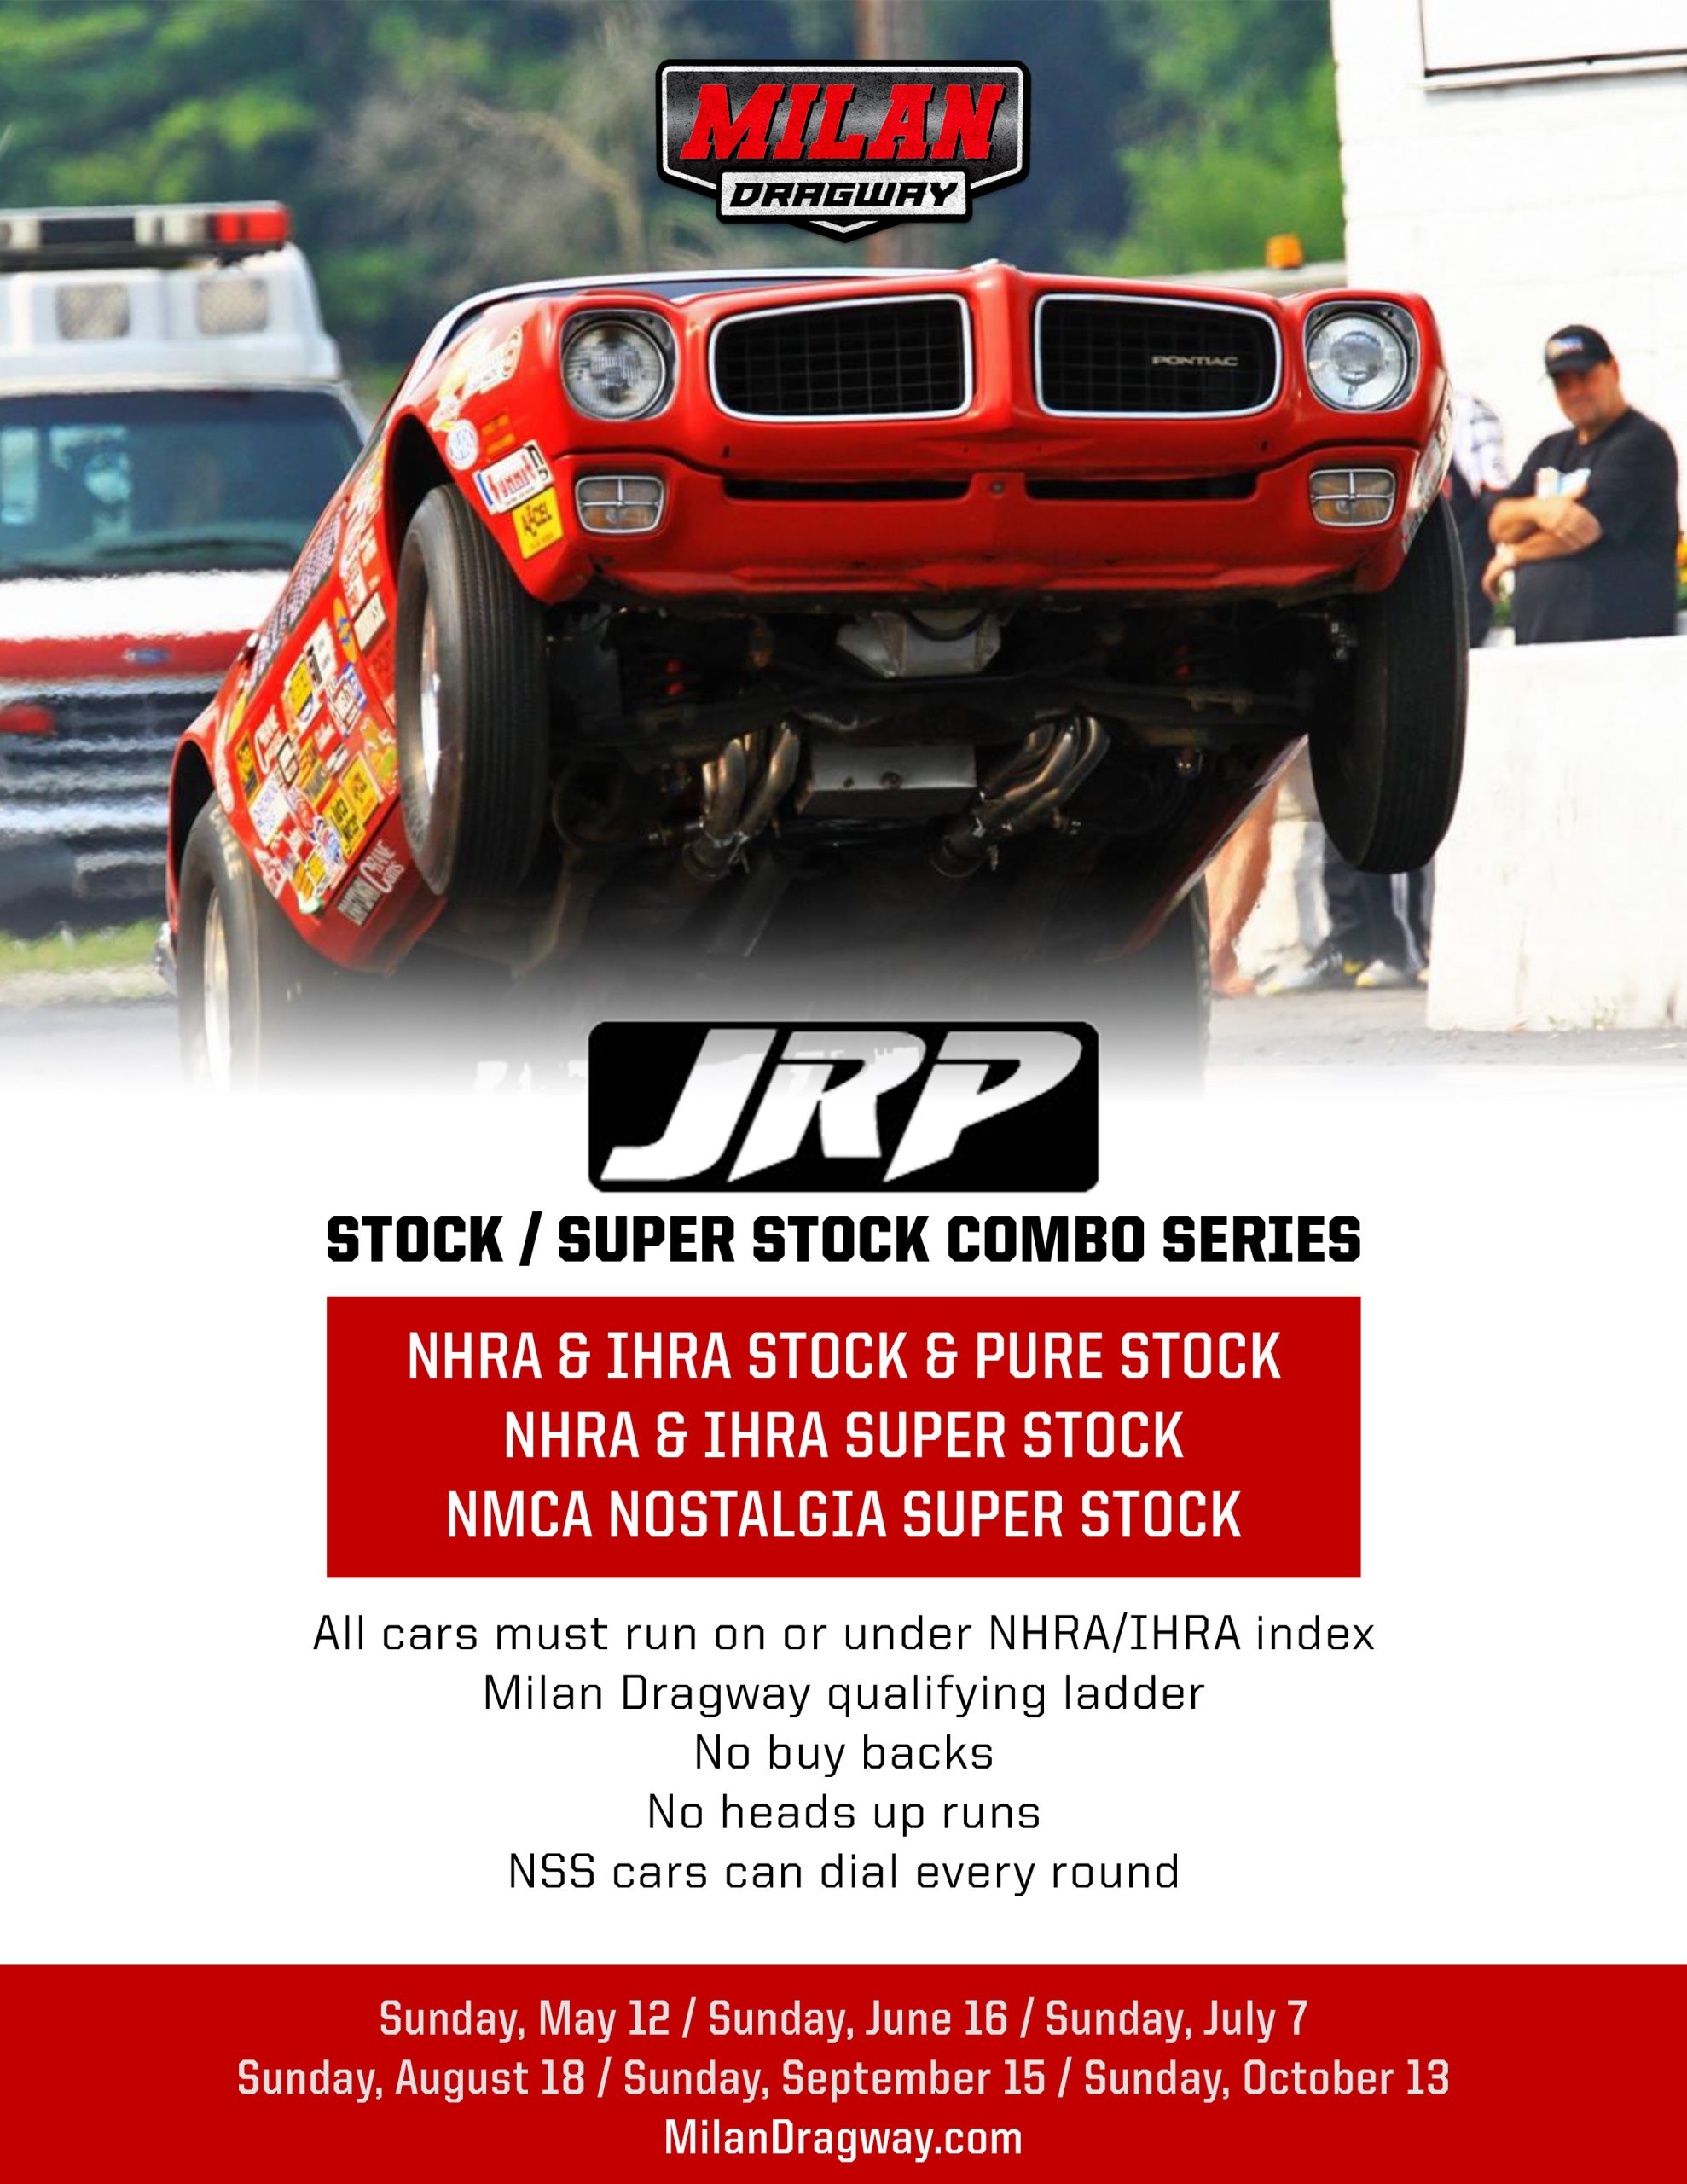 JRP Stock / Super Stock Combo Race Series